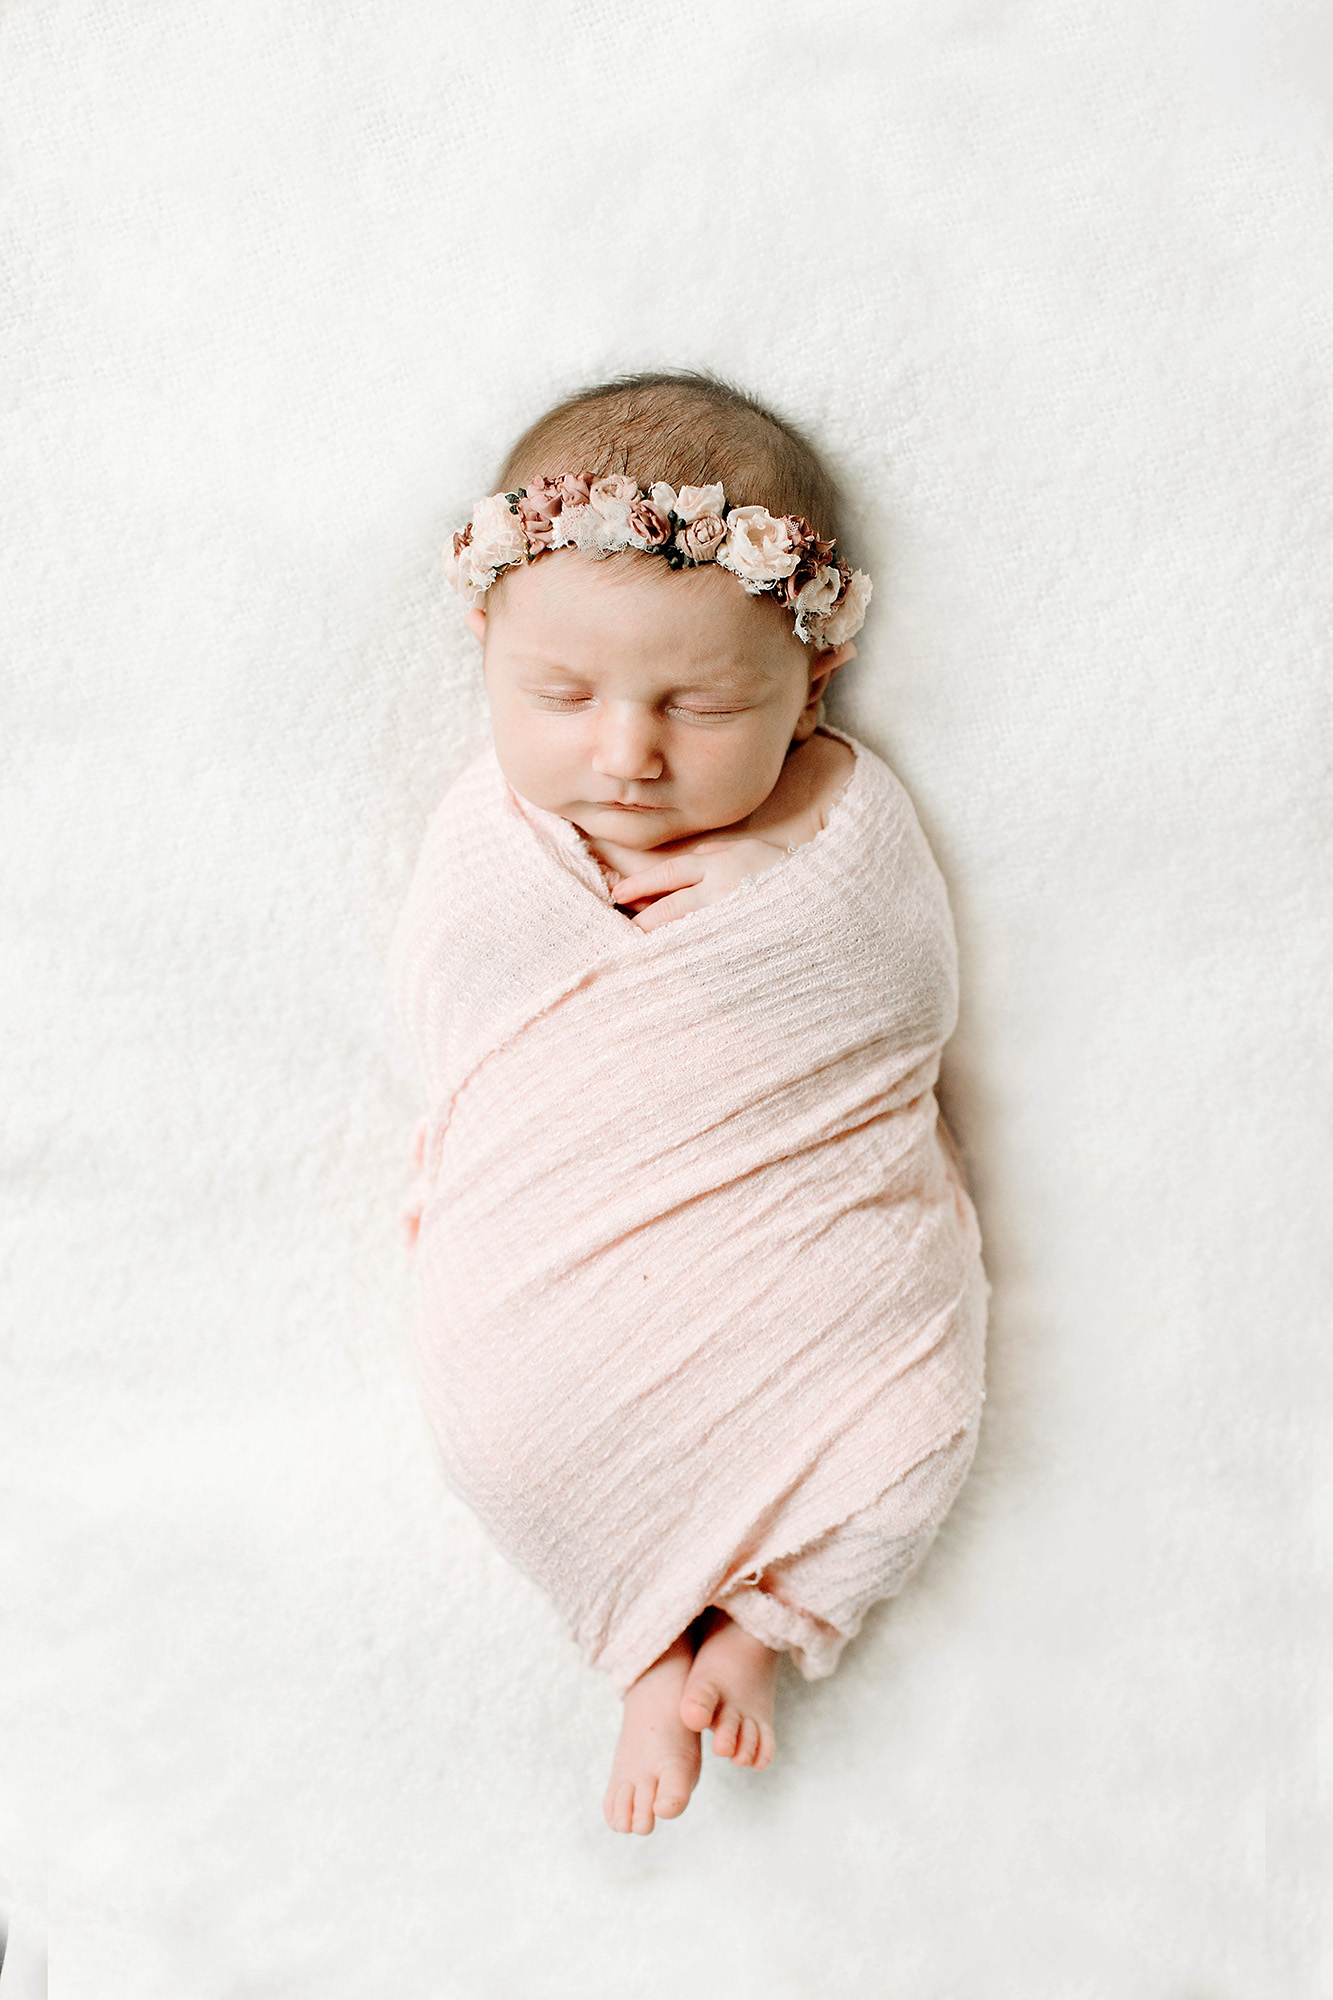 Newborn baby with floral headband